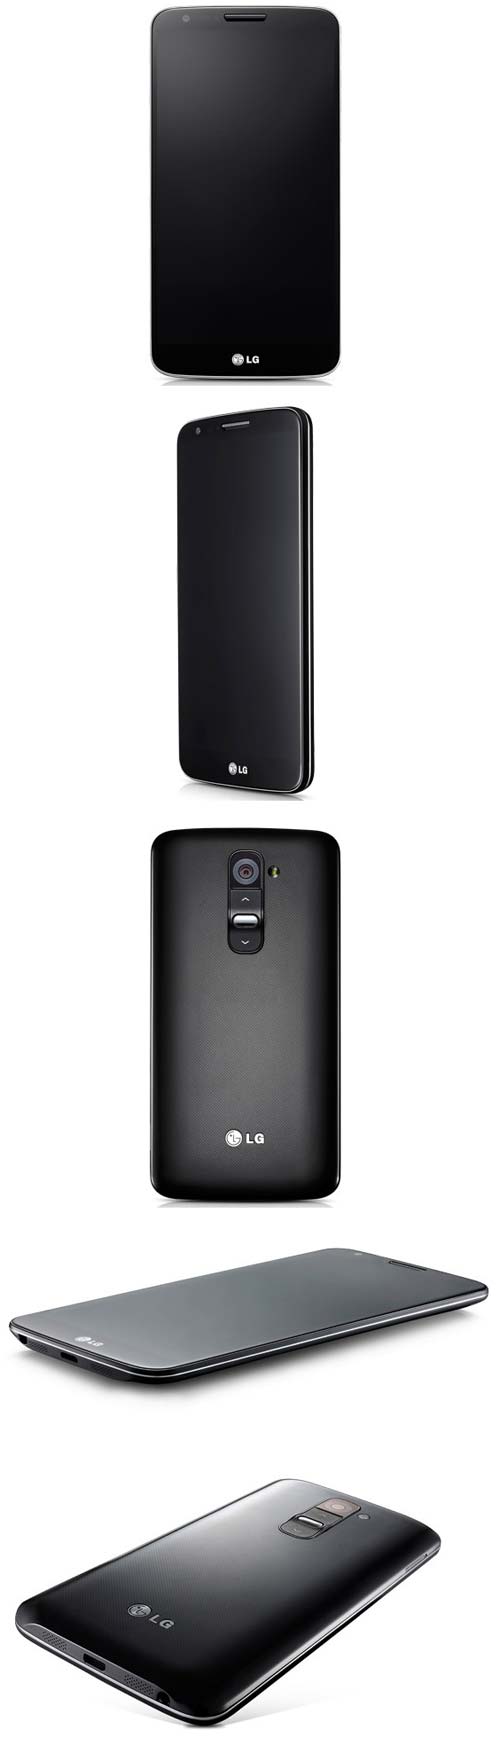 LG G2 выпущен, ждём в продаже